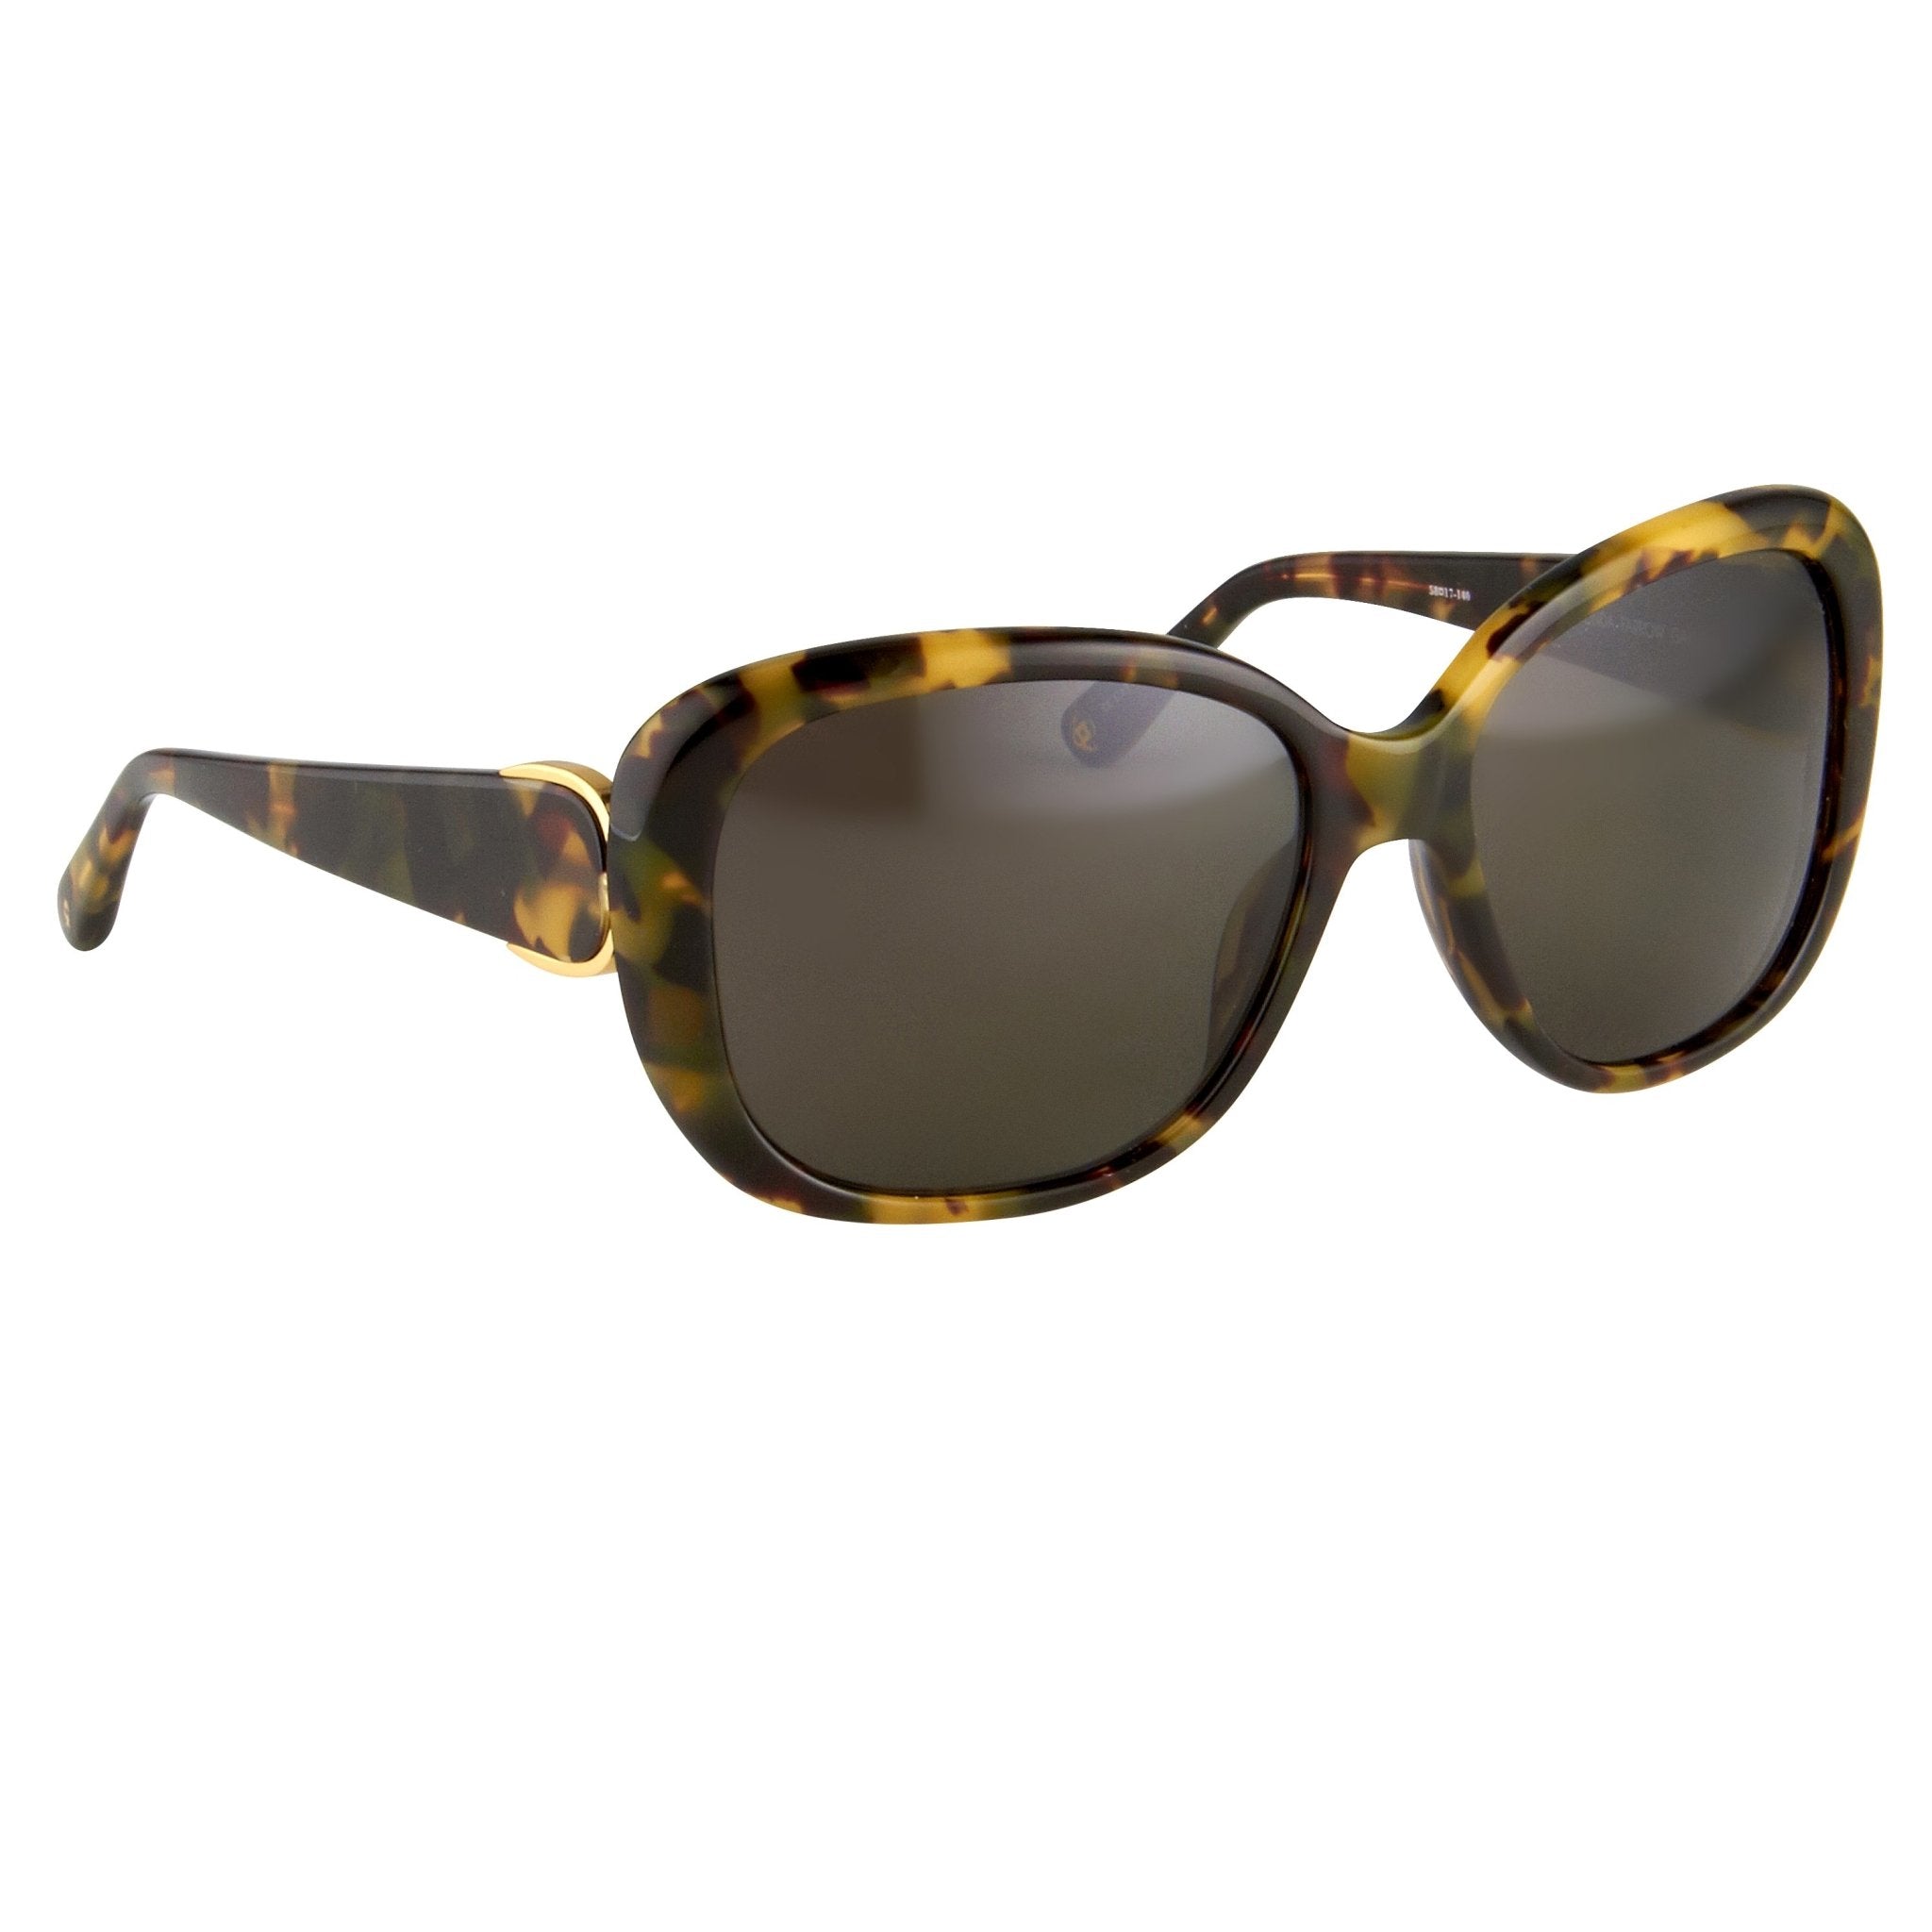 Oscar De La Renta Sunglasses Oversized Frame Tortoise Shell and Grey Lenses - ODLR45C2SUN - Watches & Crystals